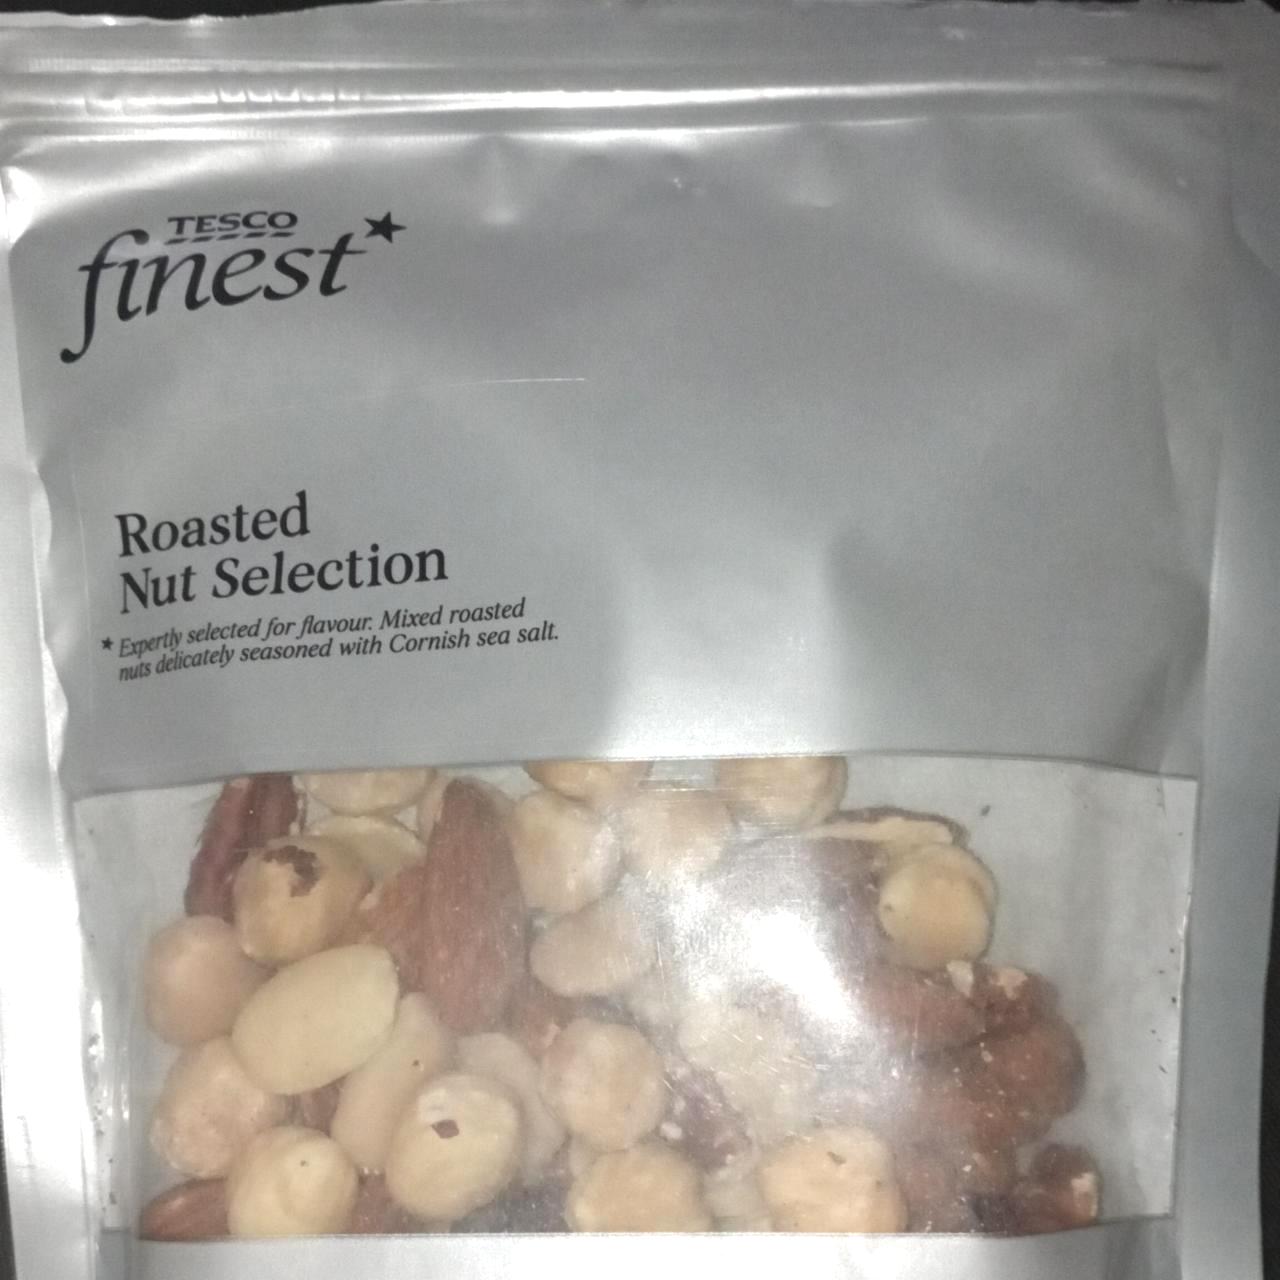 Képek - Roasted Nut selection Tesco Finest